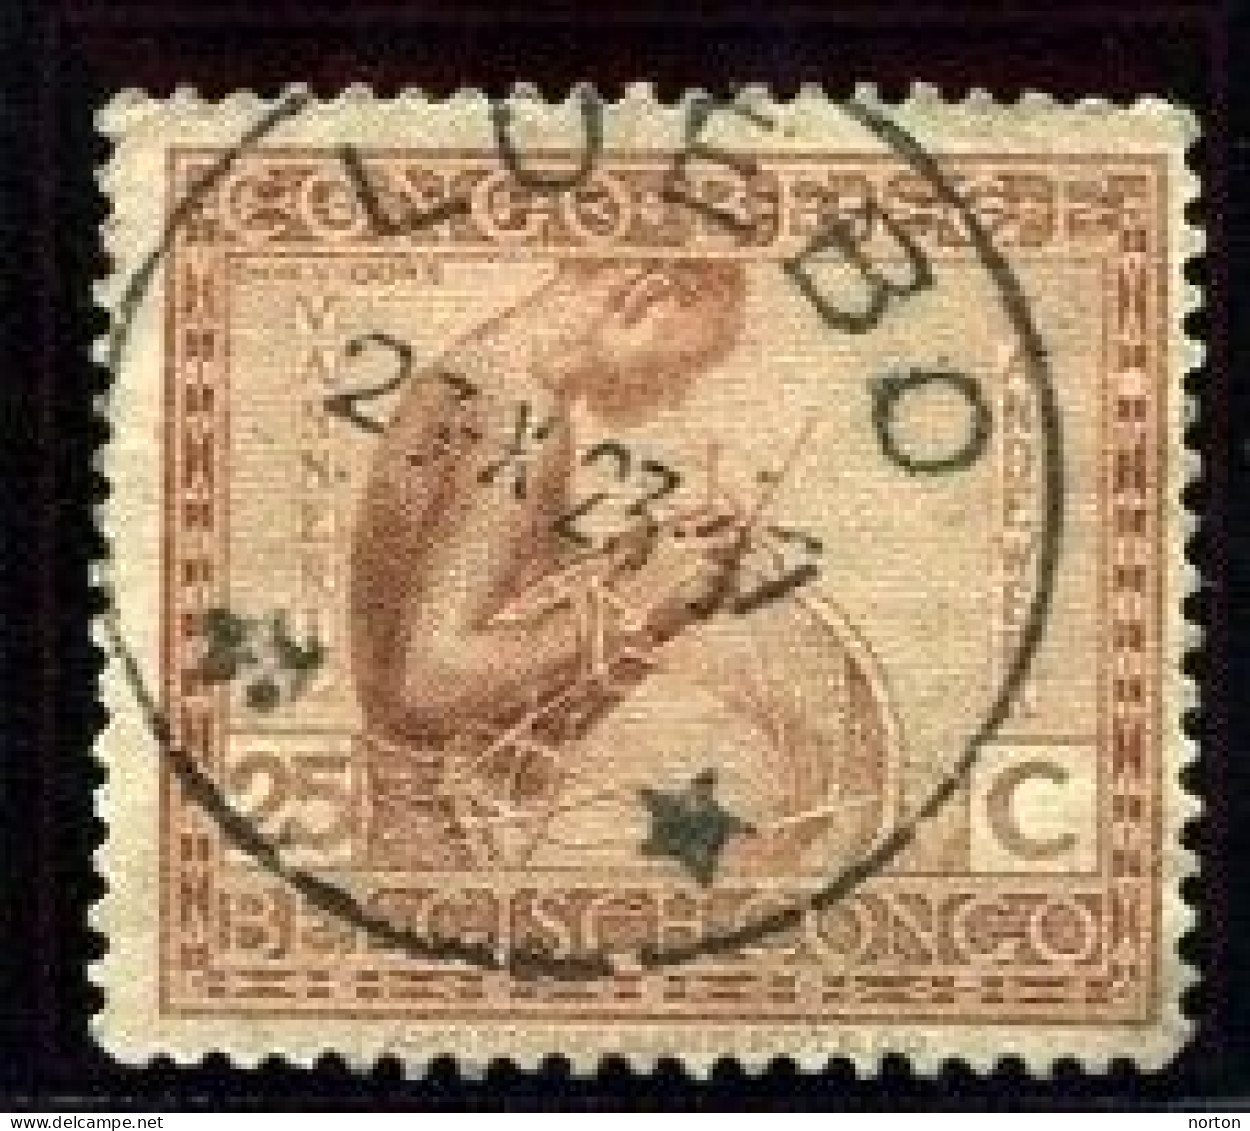 Congo Luebo Oblit. Keach 5D1-Dmyt Sur C.O.B. 110 Le 23/10/1923 - Gebruikt